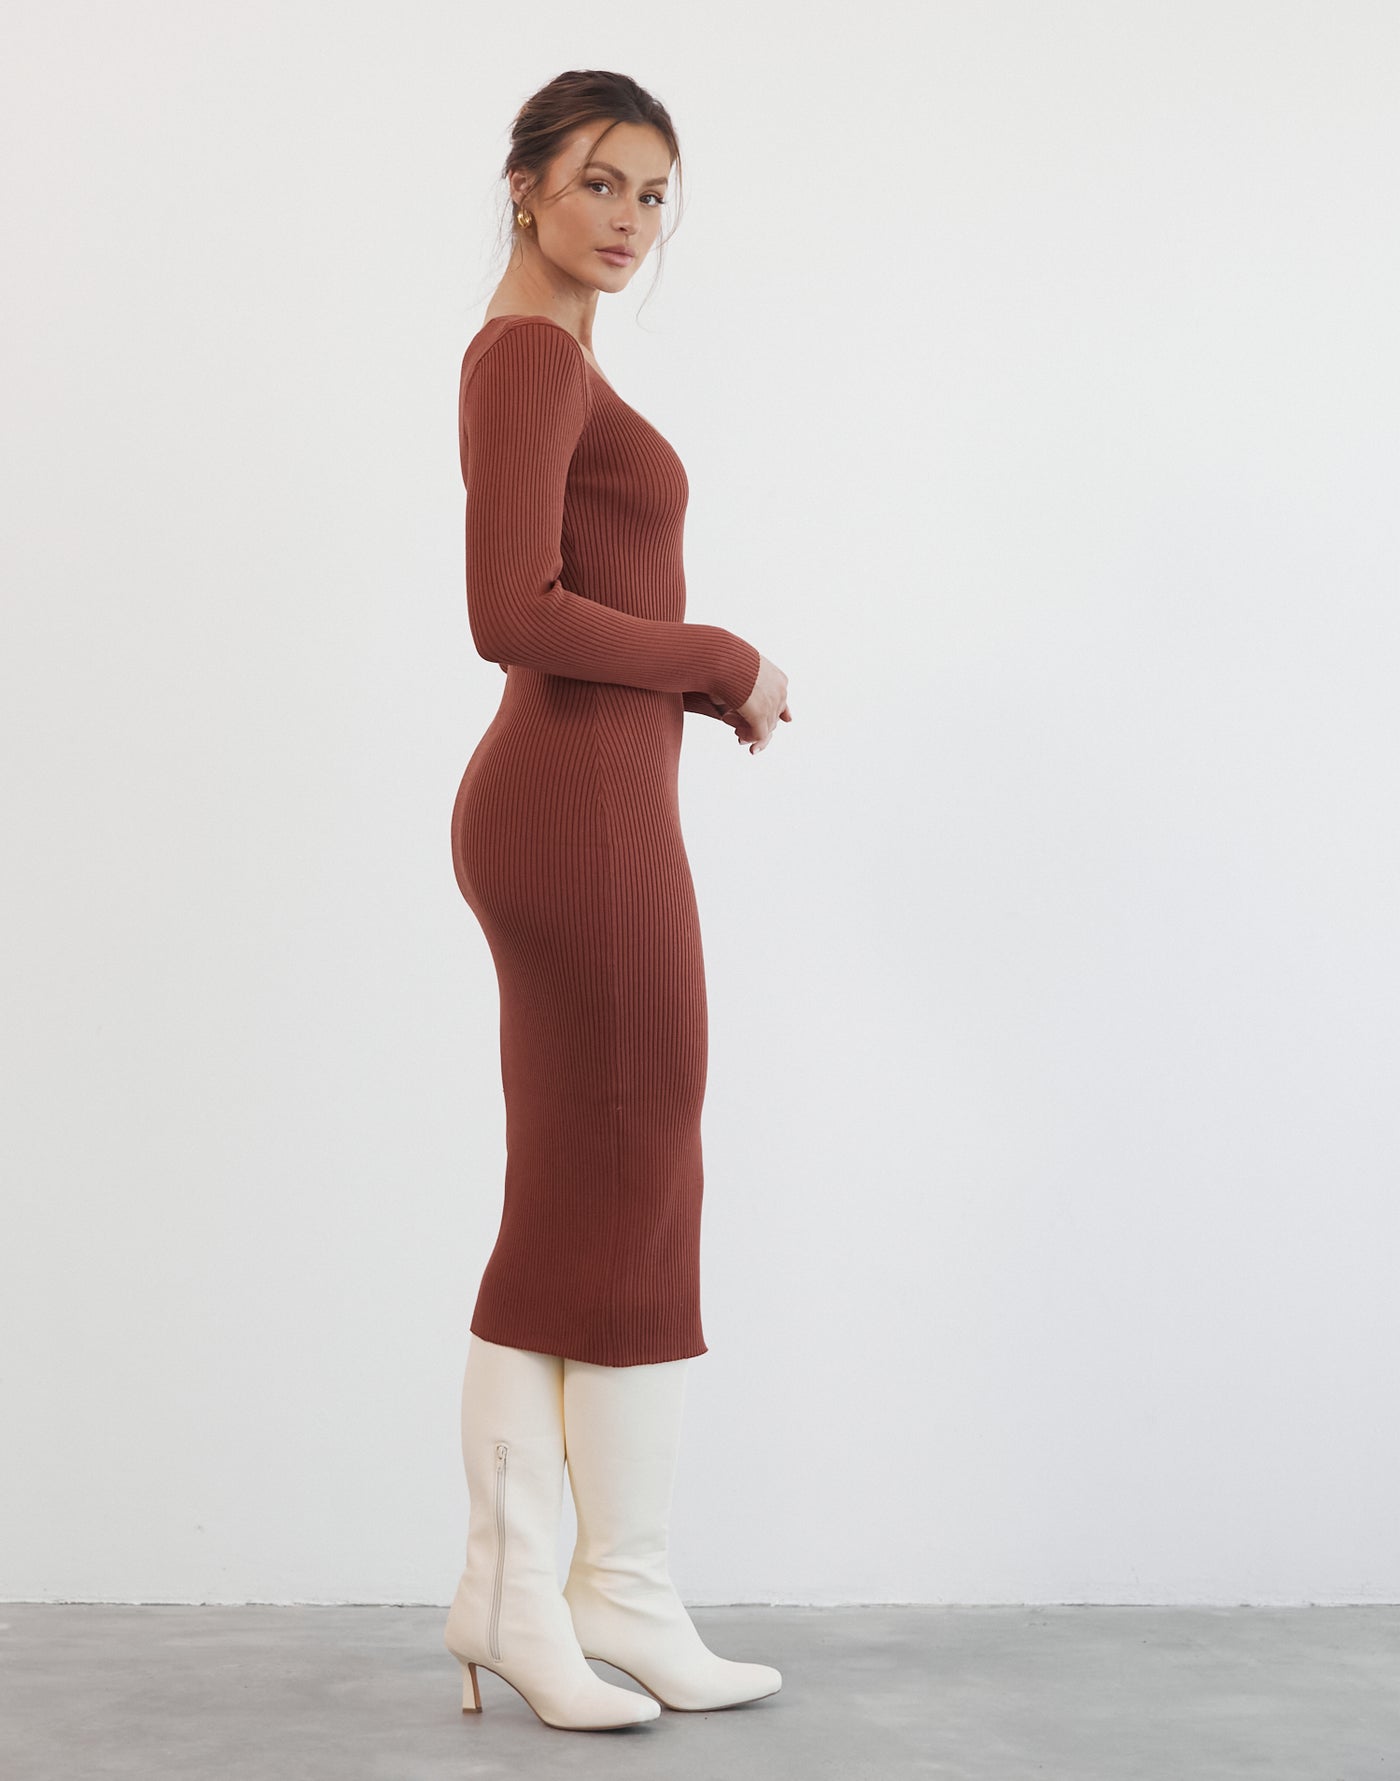 Pavel Maxi Dress (Rust) - Ribbed Knit Maxi Dress - Women's Dress - Charcoal Clothing